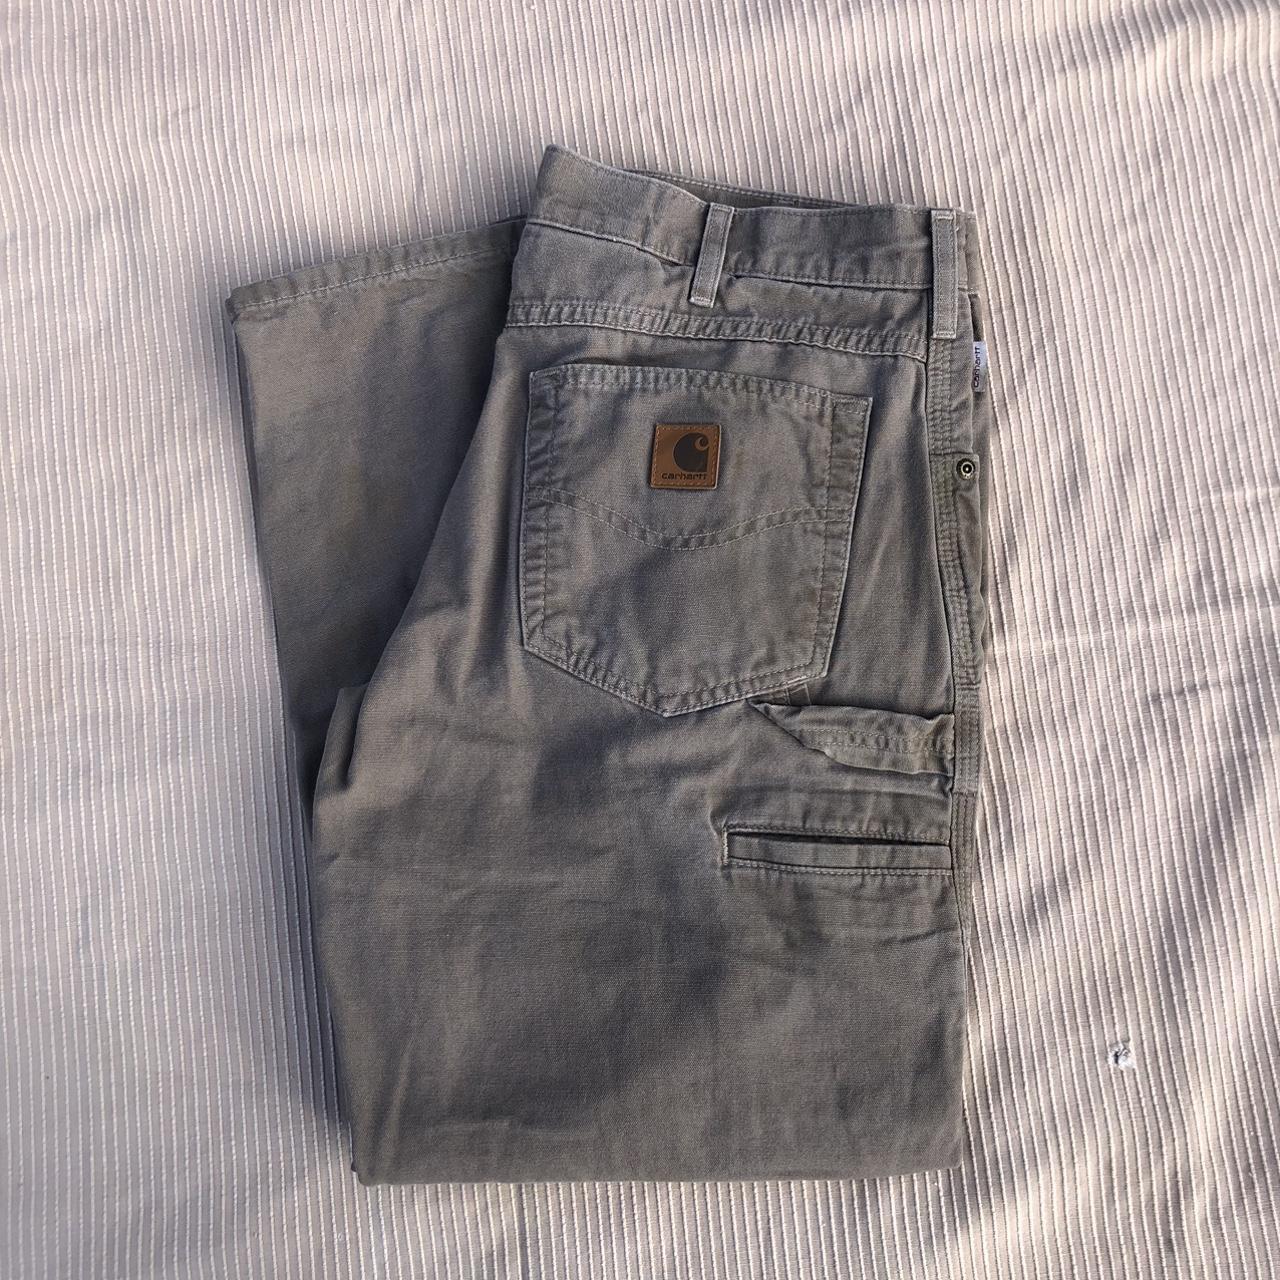 Vintage Carhartt Pale Beige Cargo Pants Stains on... - Depop